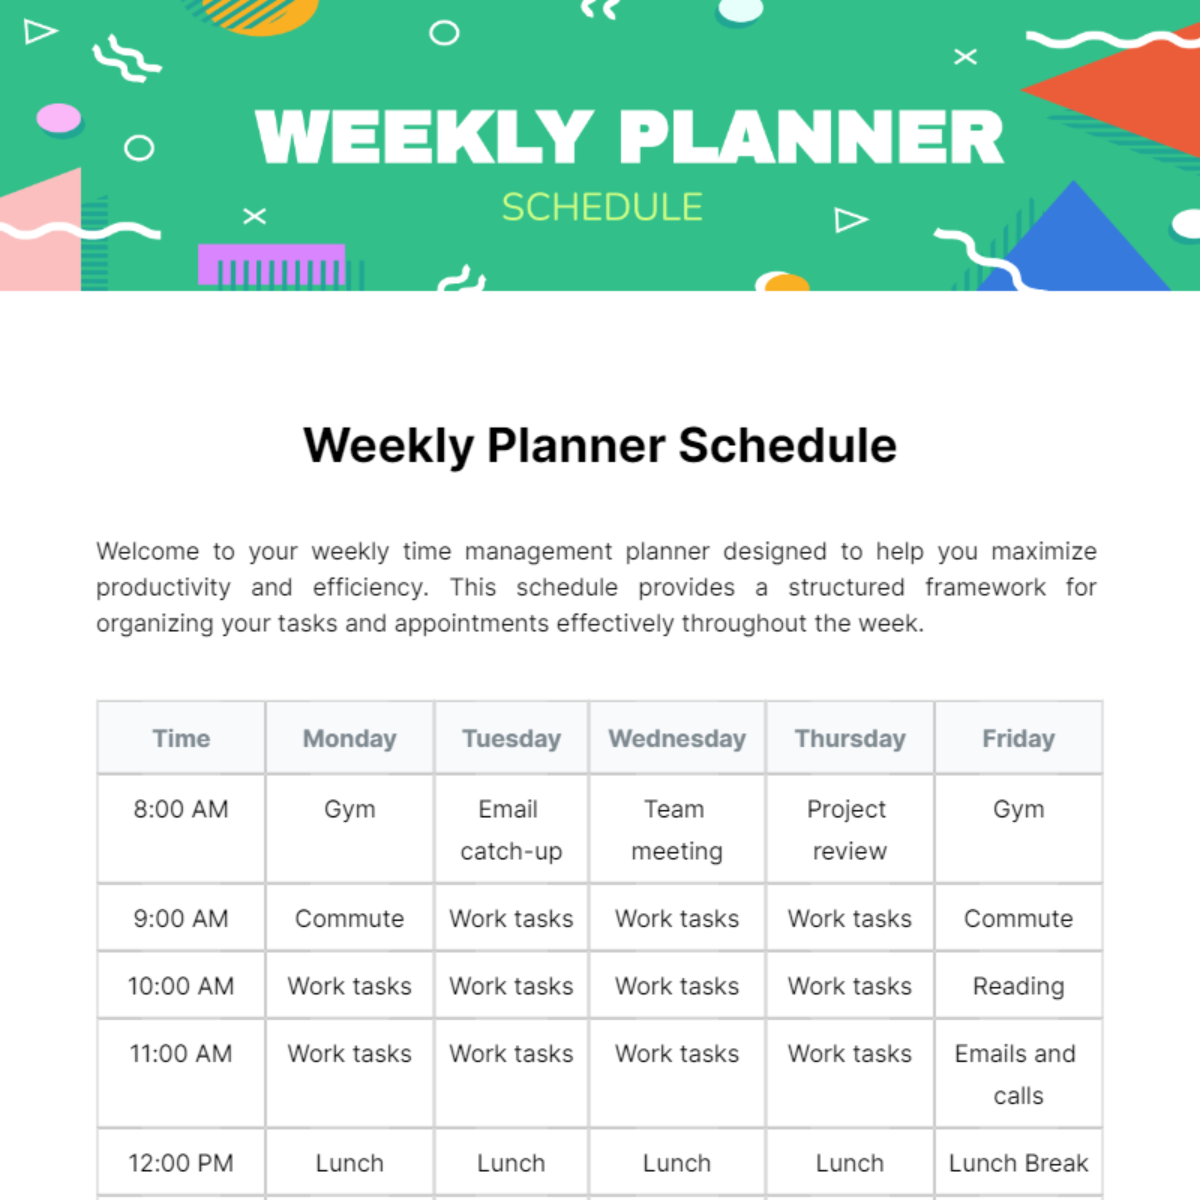 Free Weekly Planner Schedule Template